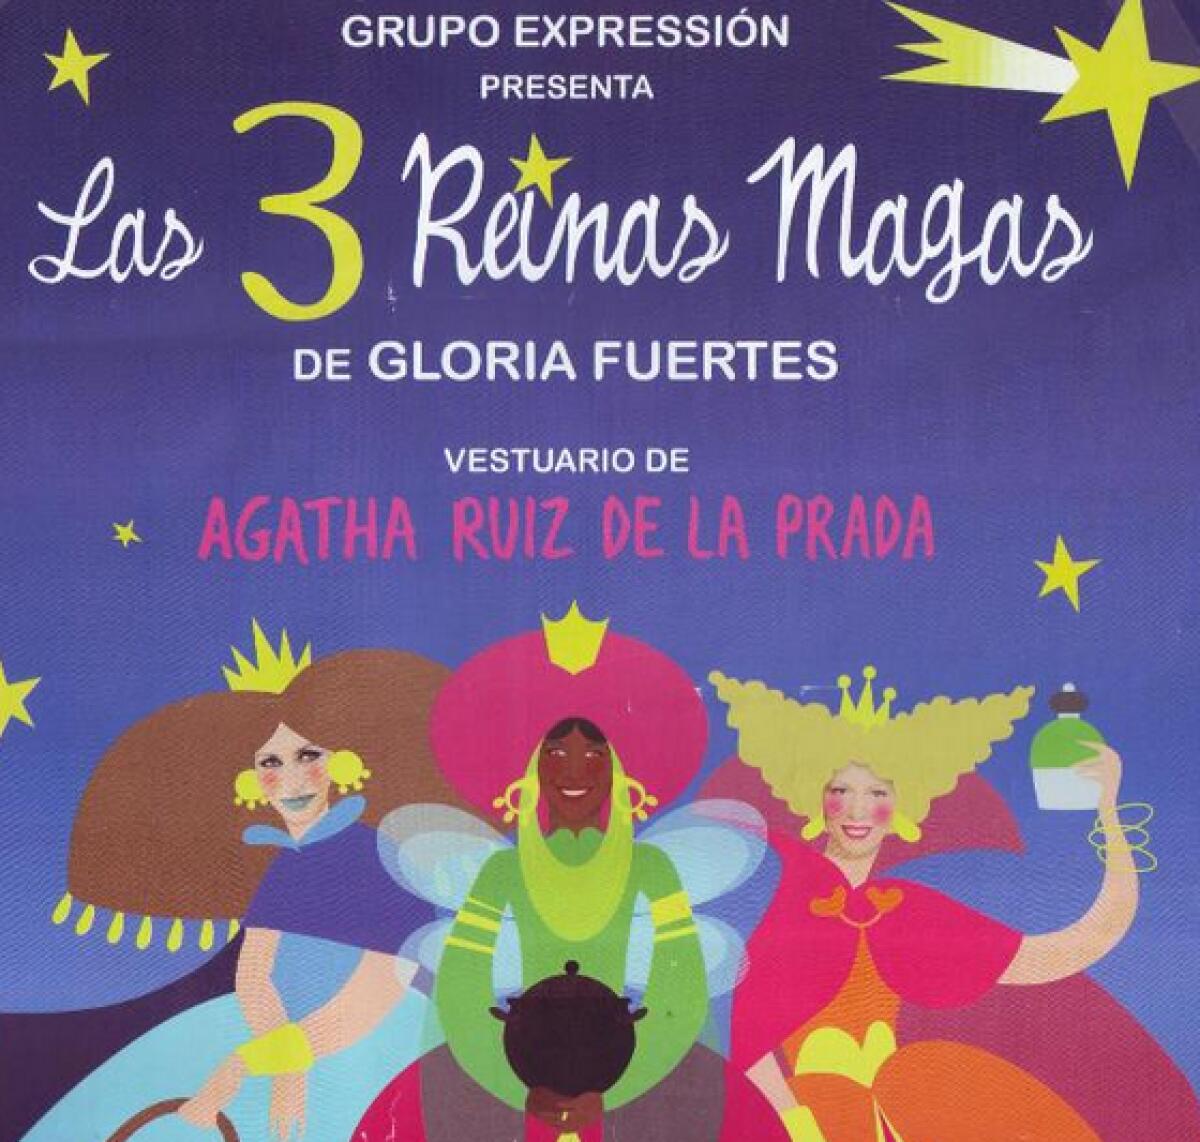 ‘Las 3 Reinas Magas’ llegan este sábado a la Casa de Cultura de l’Alfàs del Pi